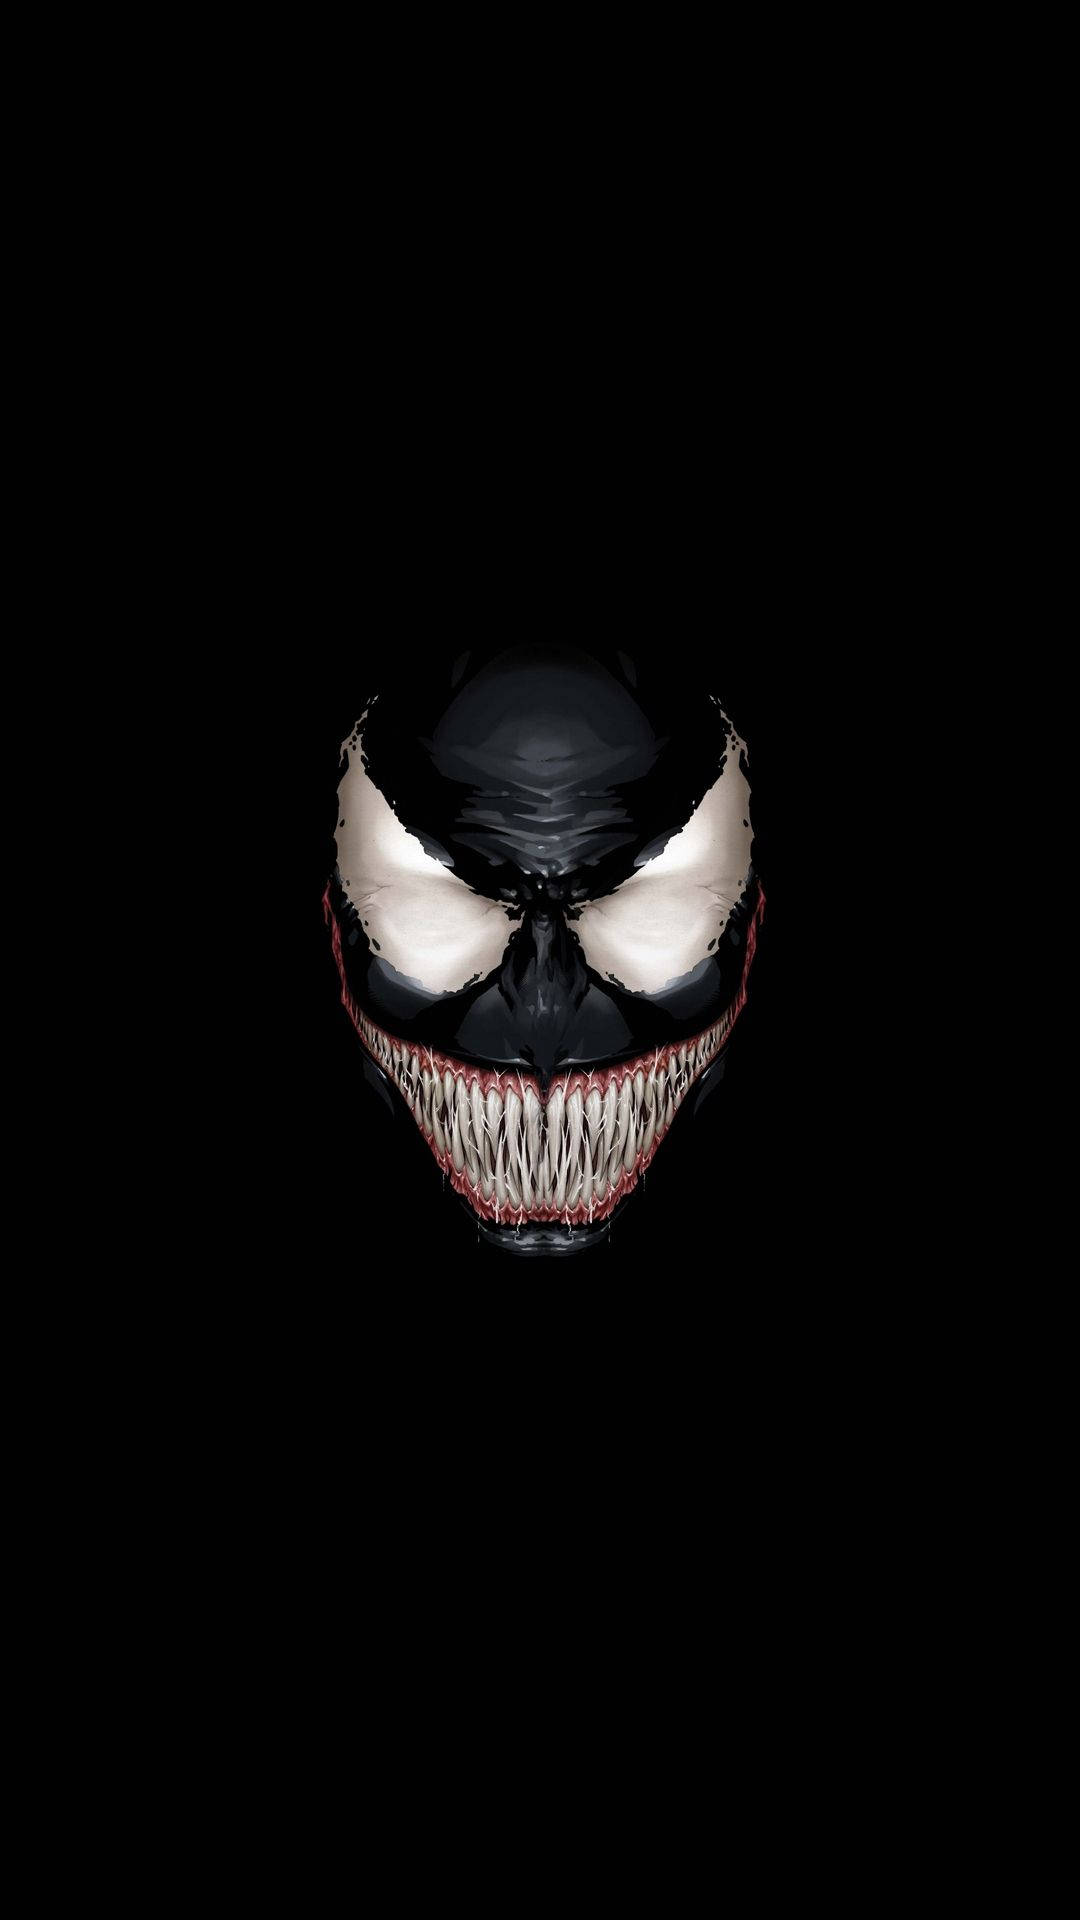 Venom 1080X1920 Wallpaper and Background Image